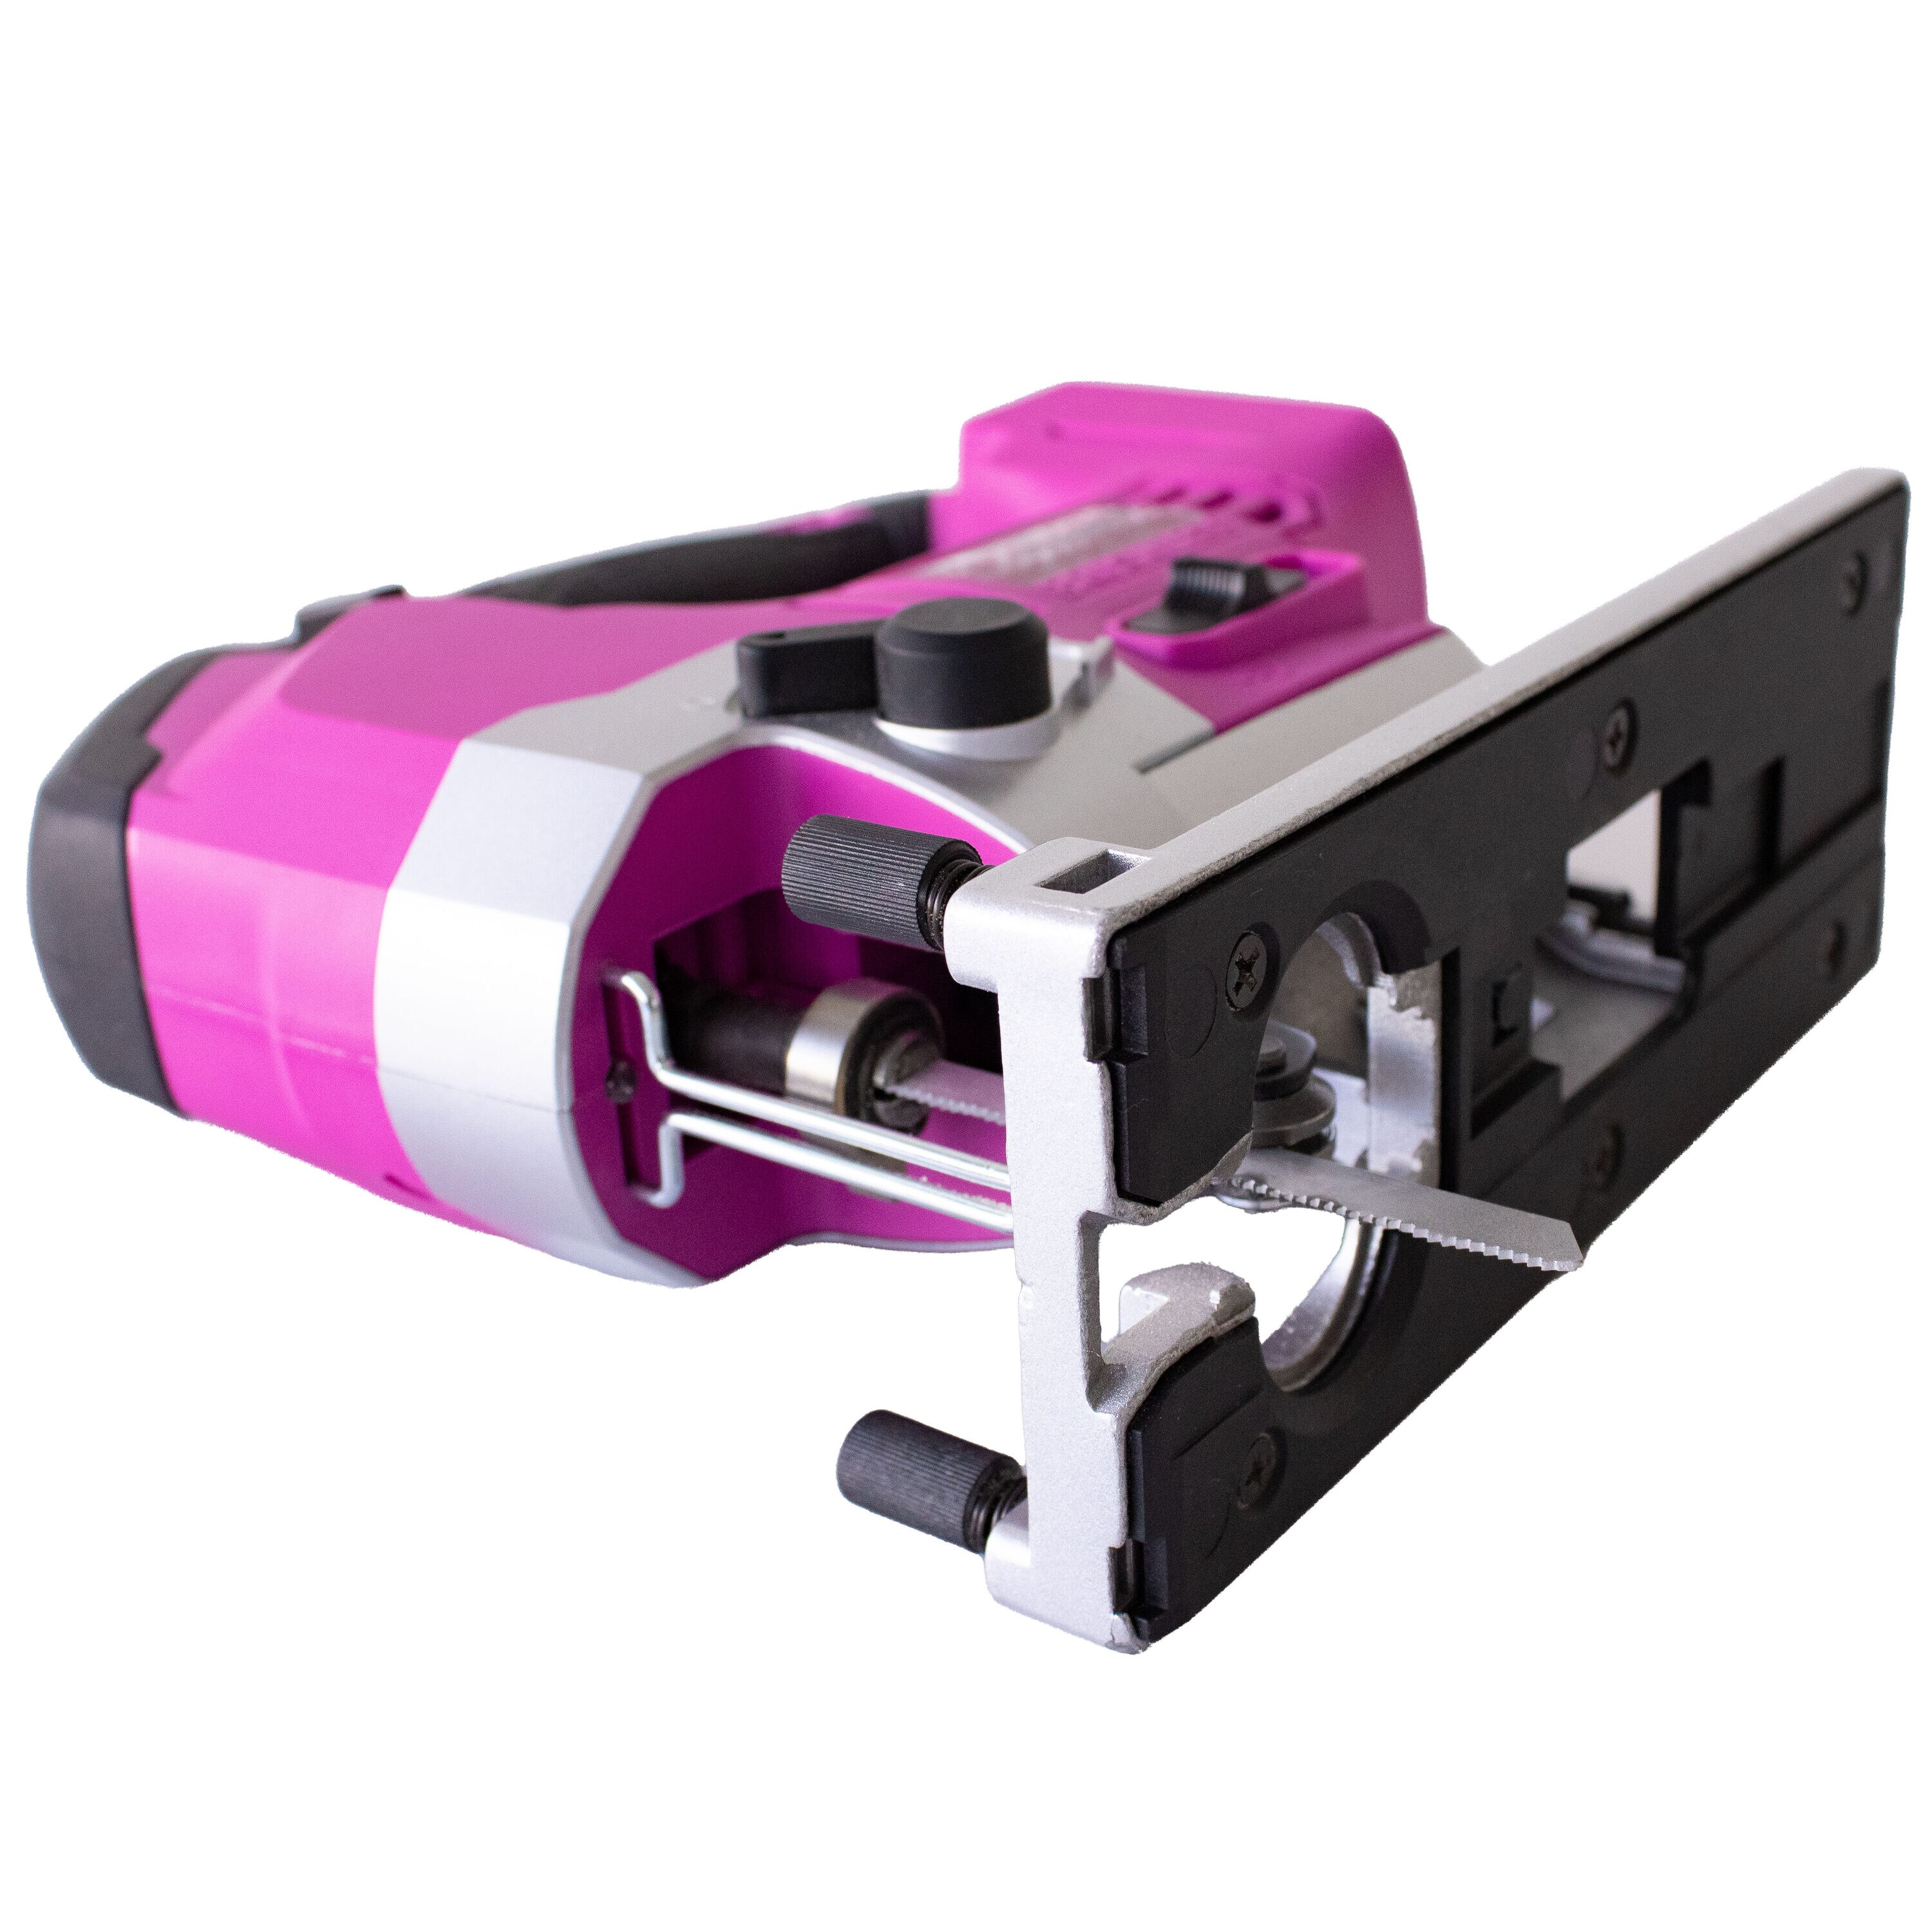 The Original Pink Box 20 Volt Brushless Keyless Cordless Jigsaw